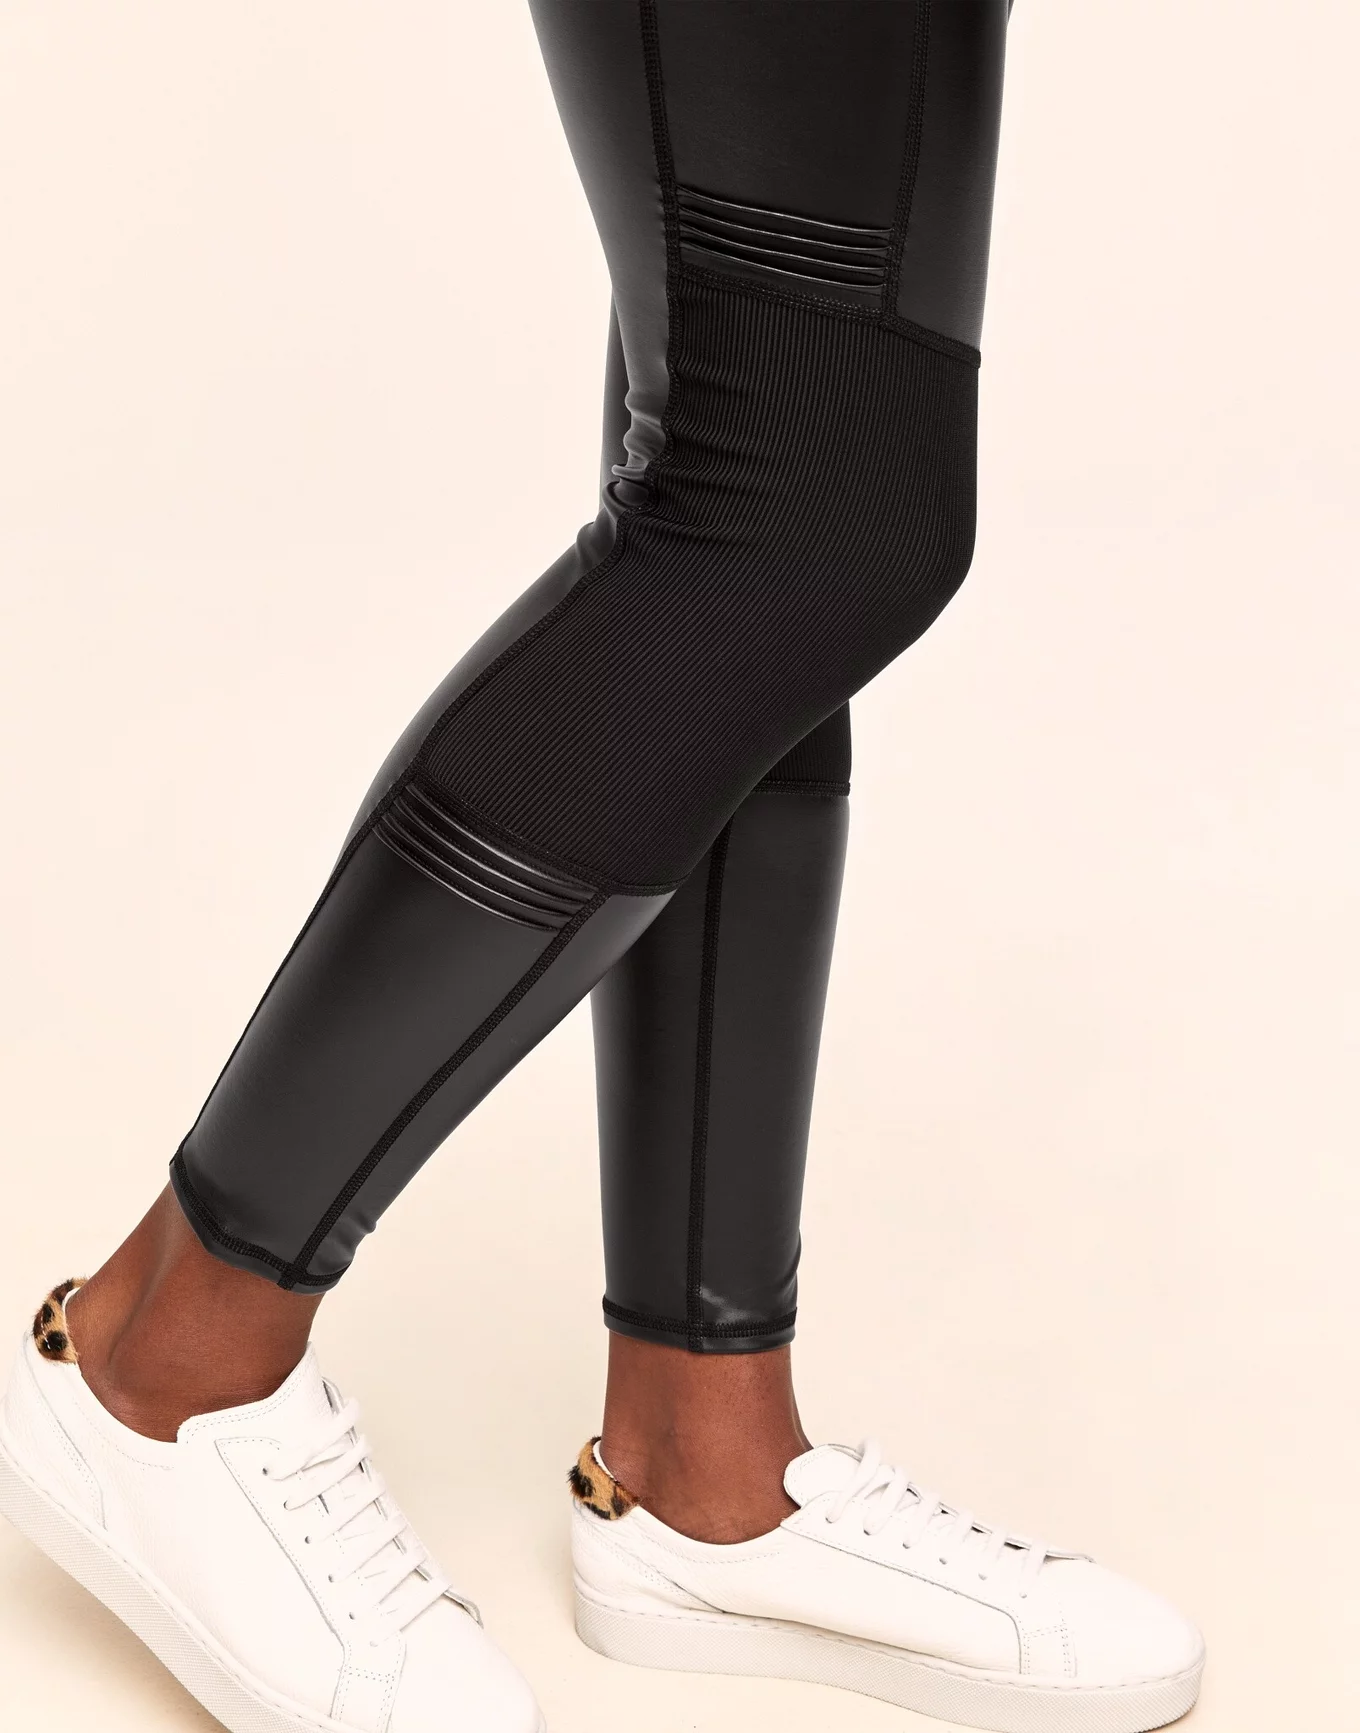 Lucy Novelty Leatherette Legging Black Pintuck Details, M-XL